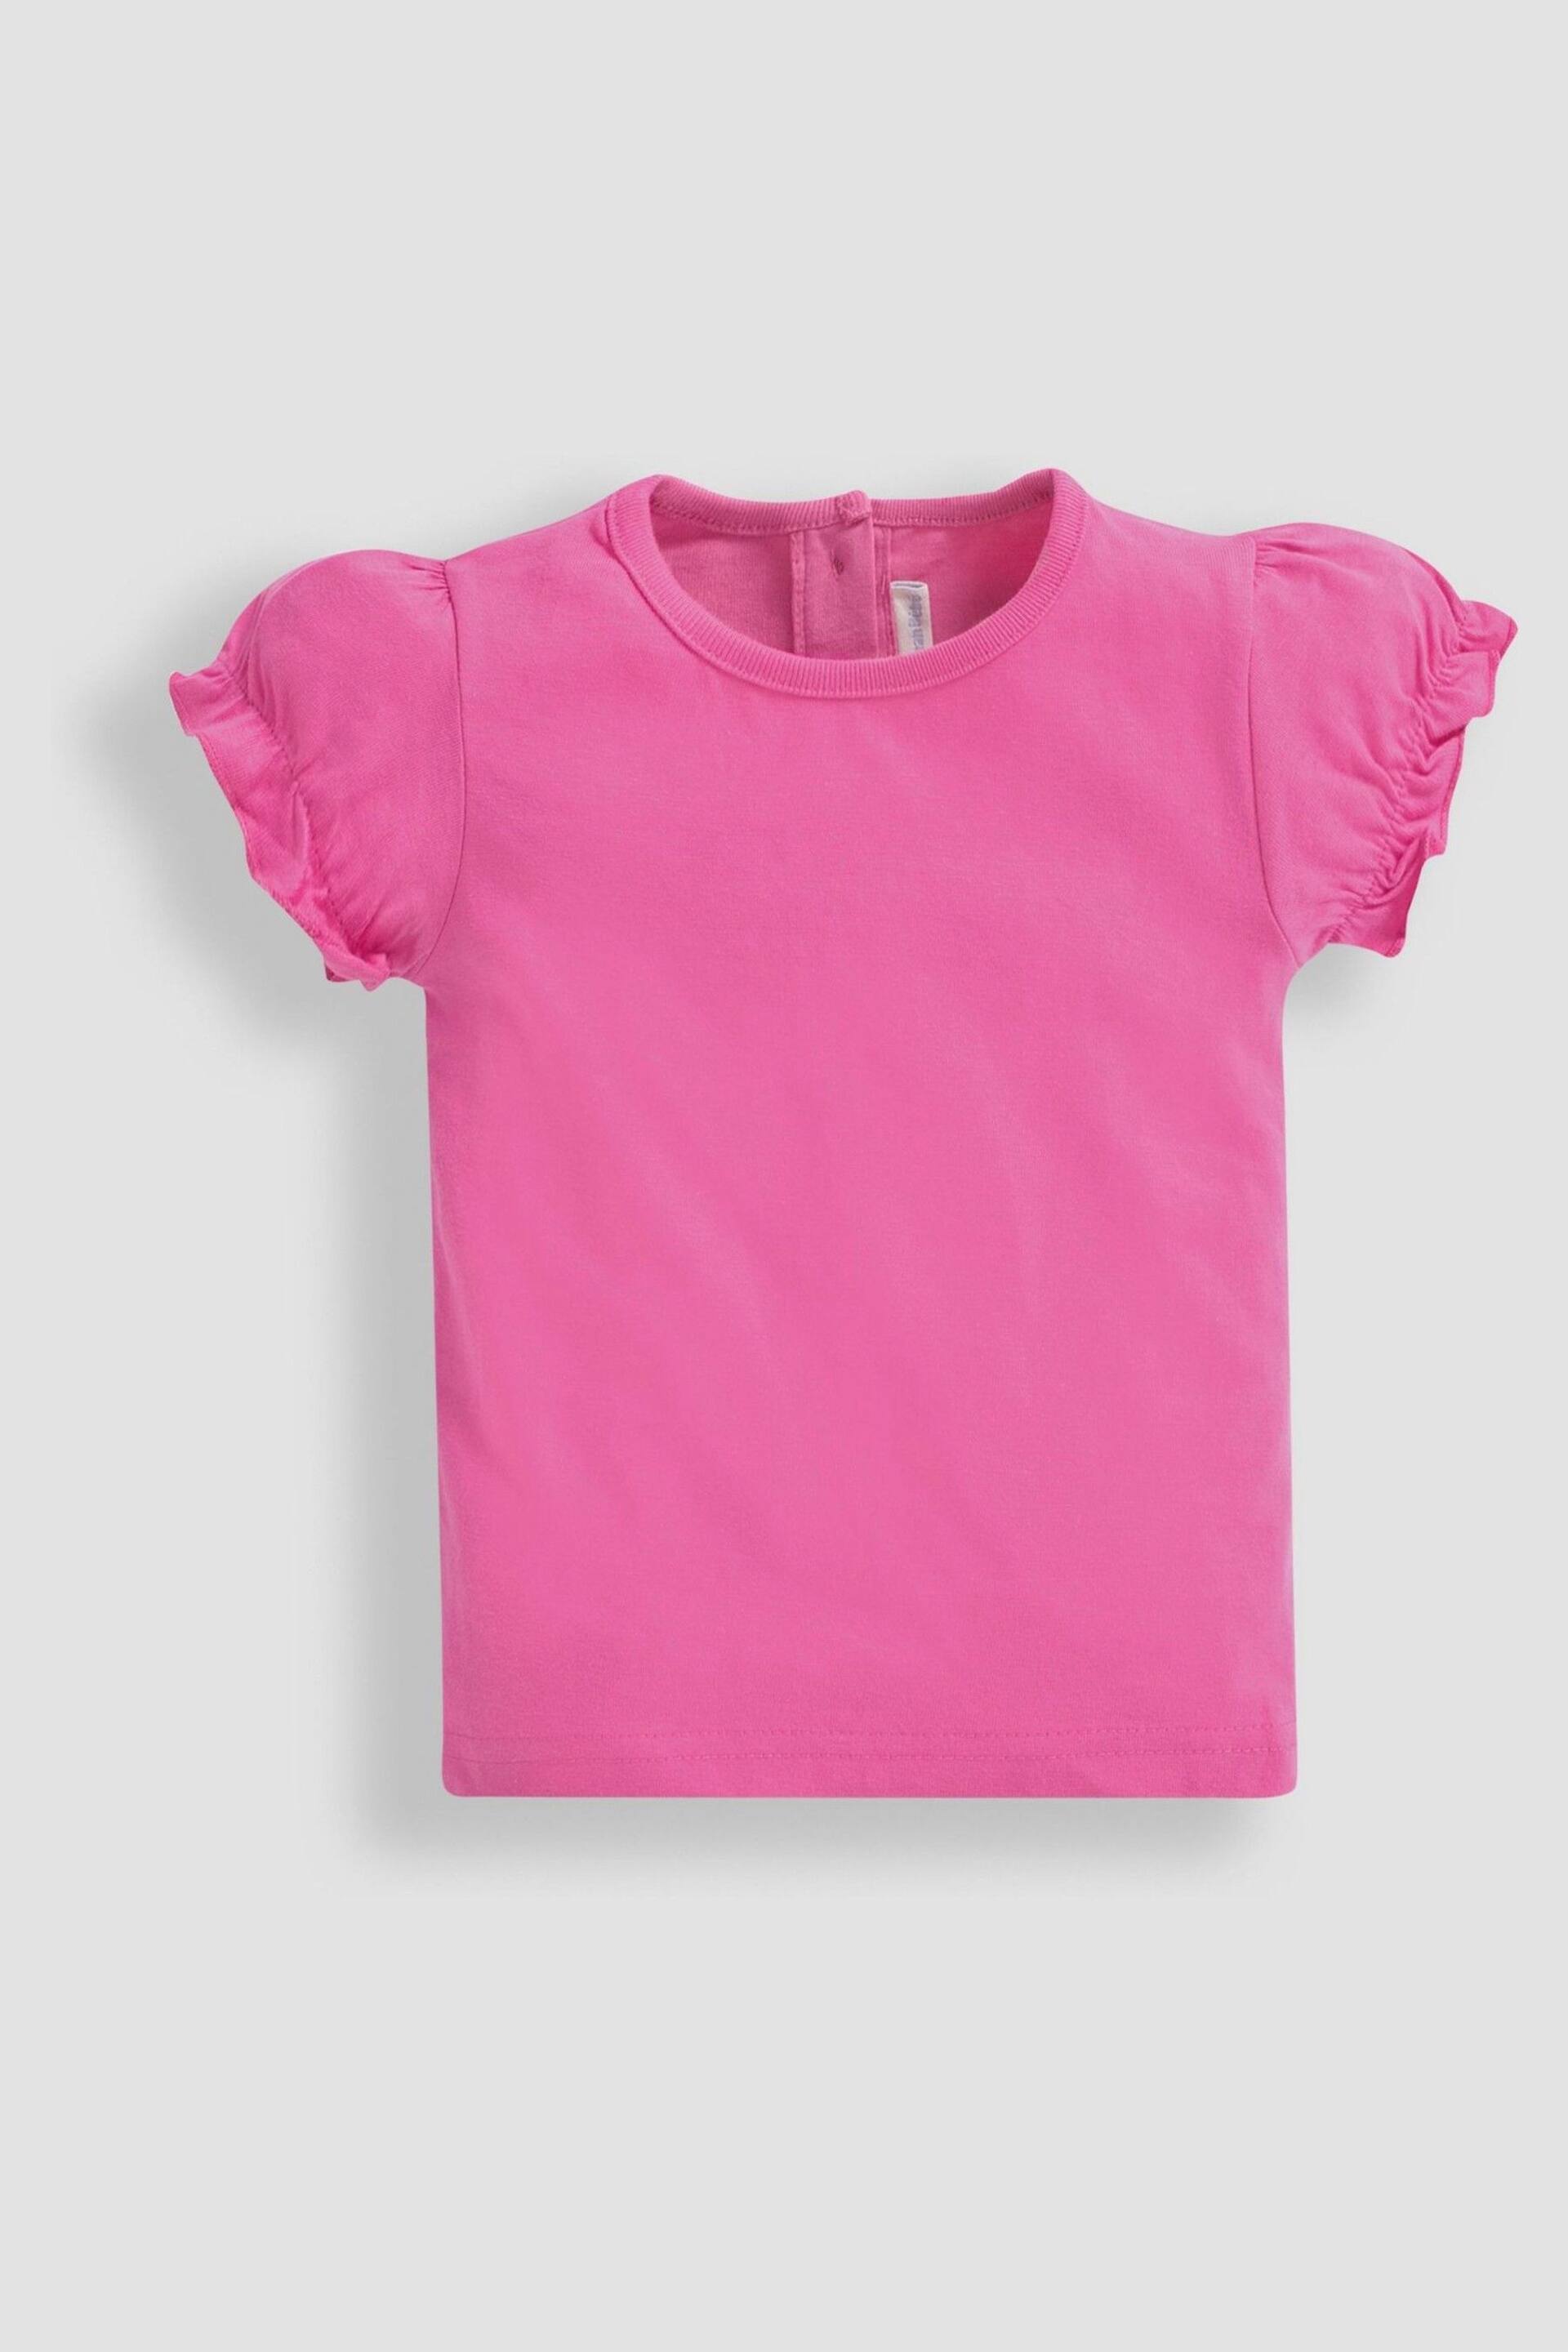 JoJo Maman Bébé Orchid Pink Pretty T-Shirt - Image 4 of 6